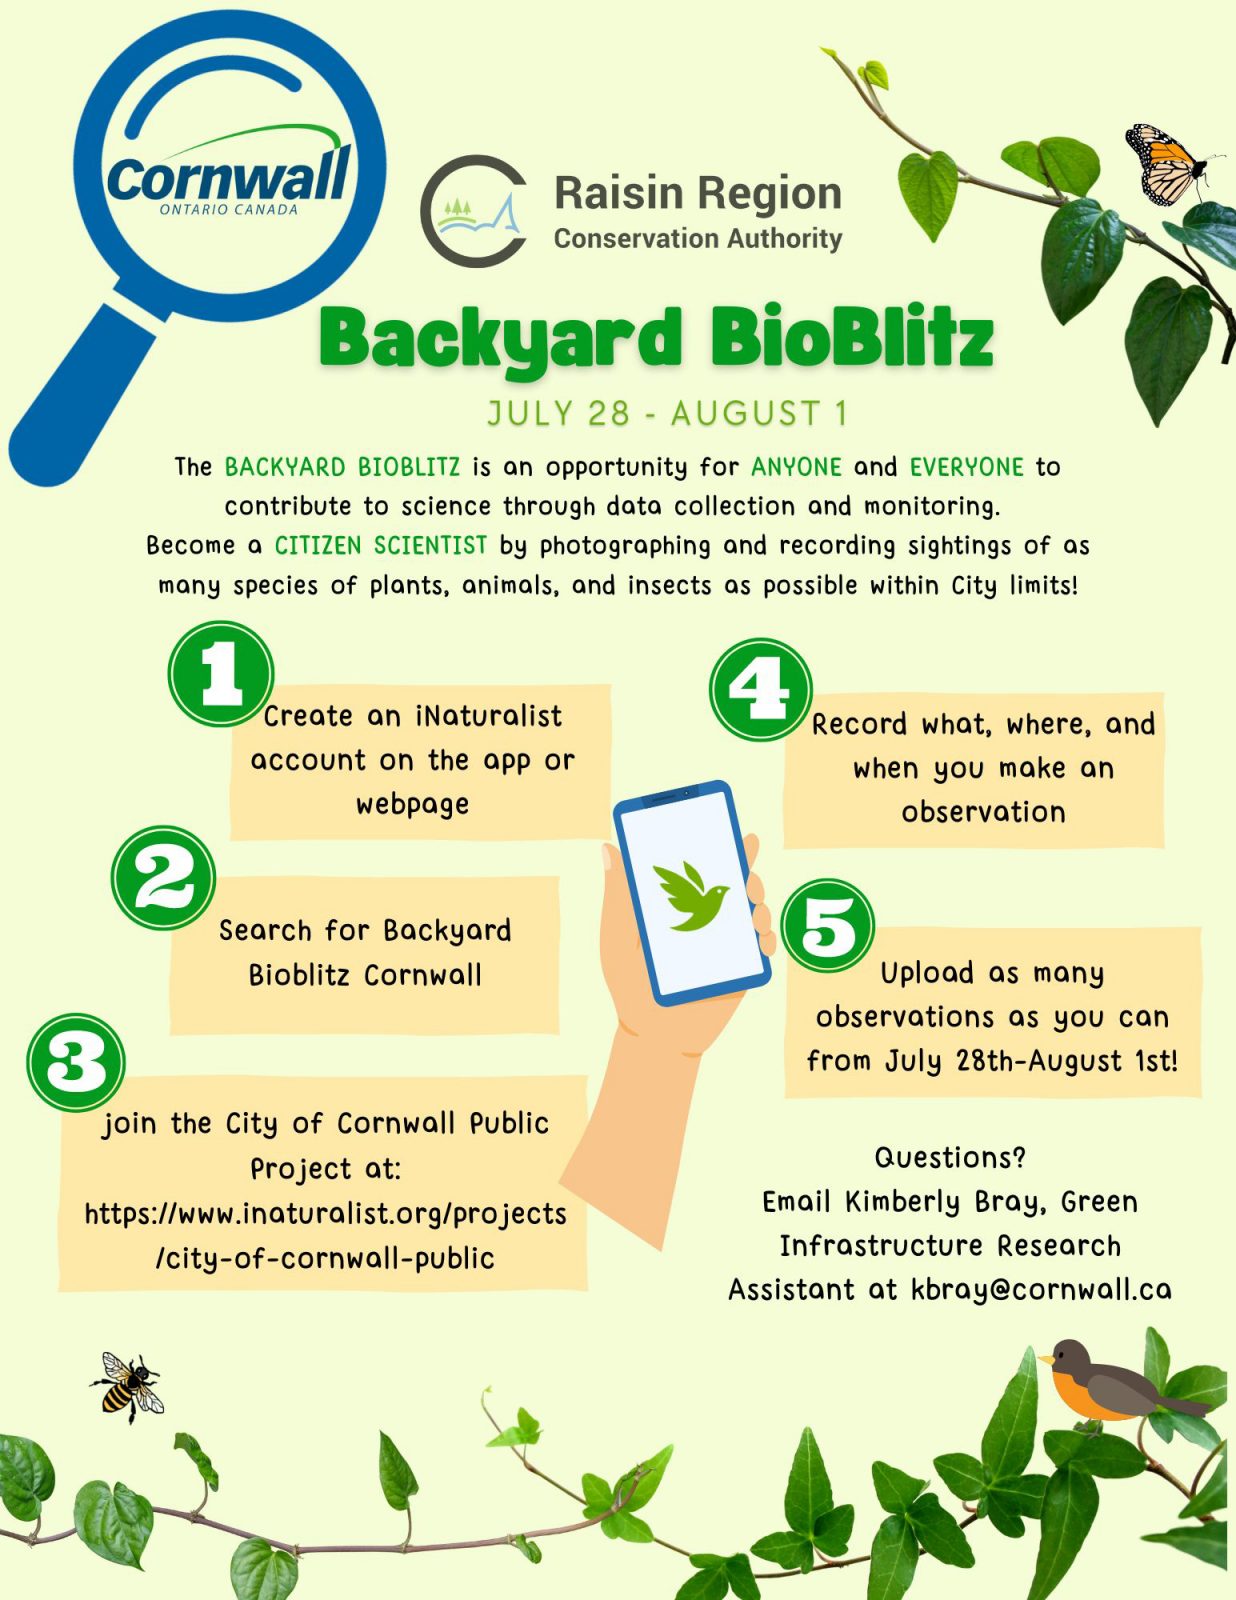 Help document nature during the 2022 Backyard Bioblitz